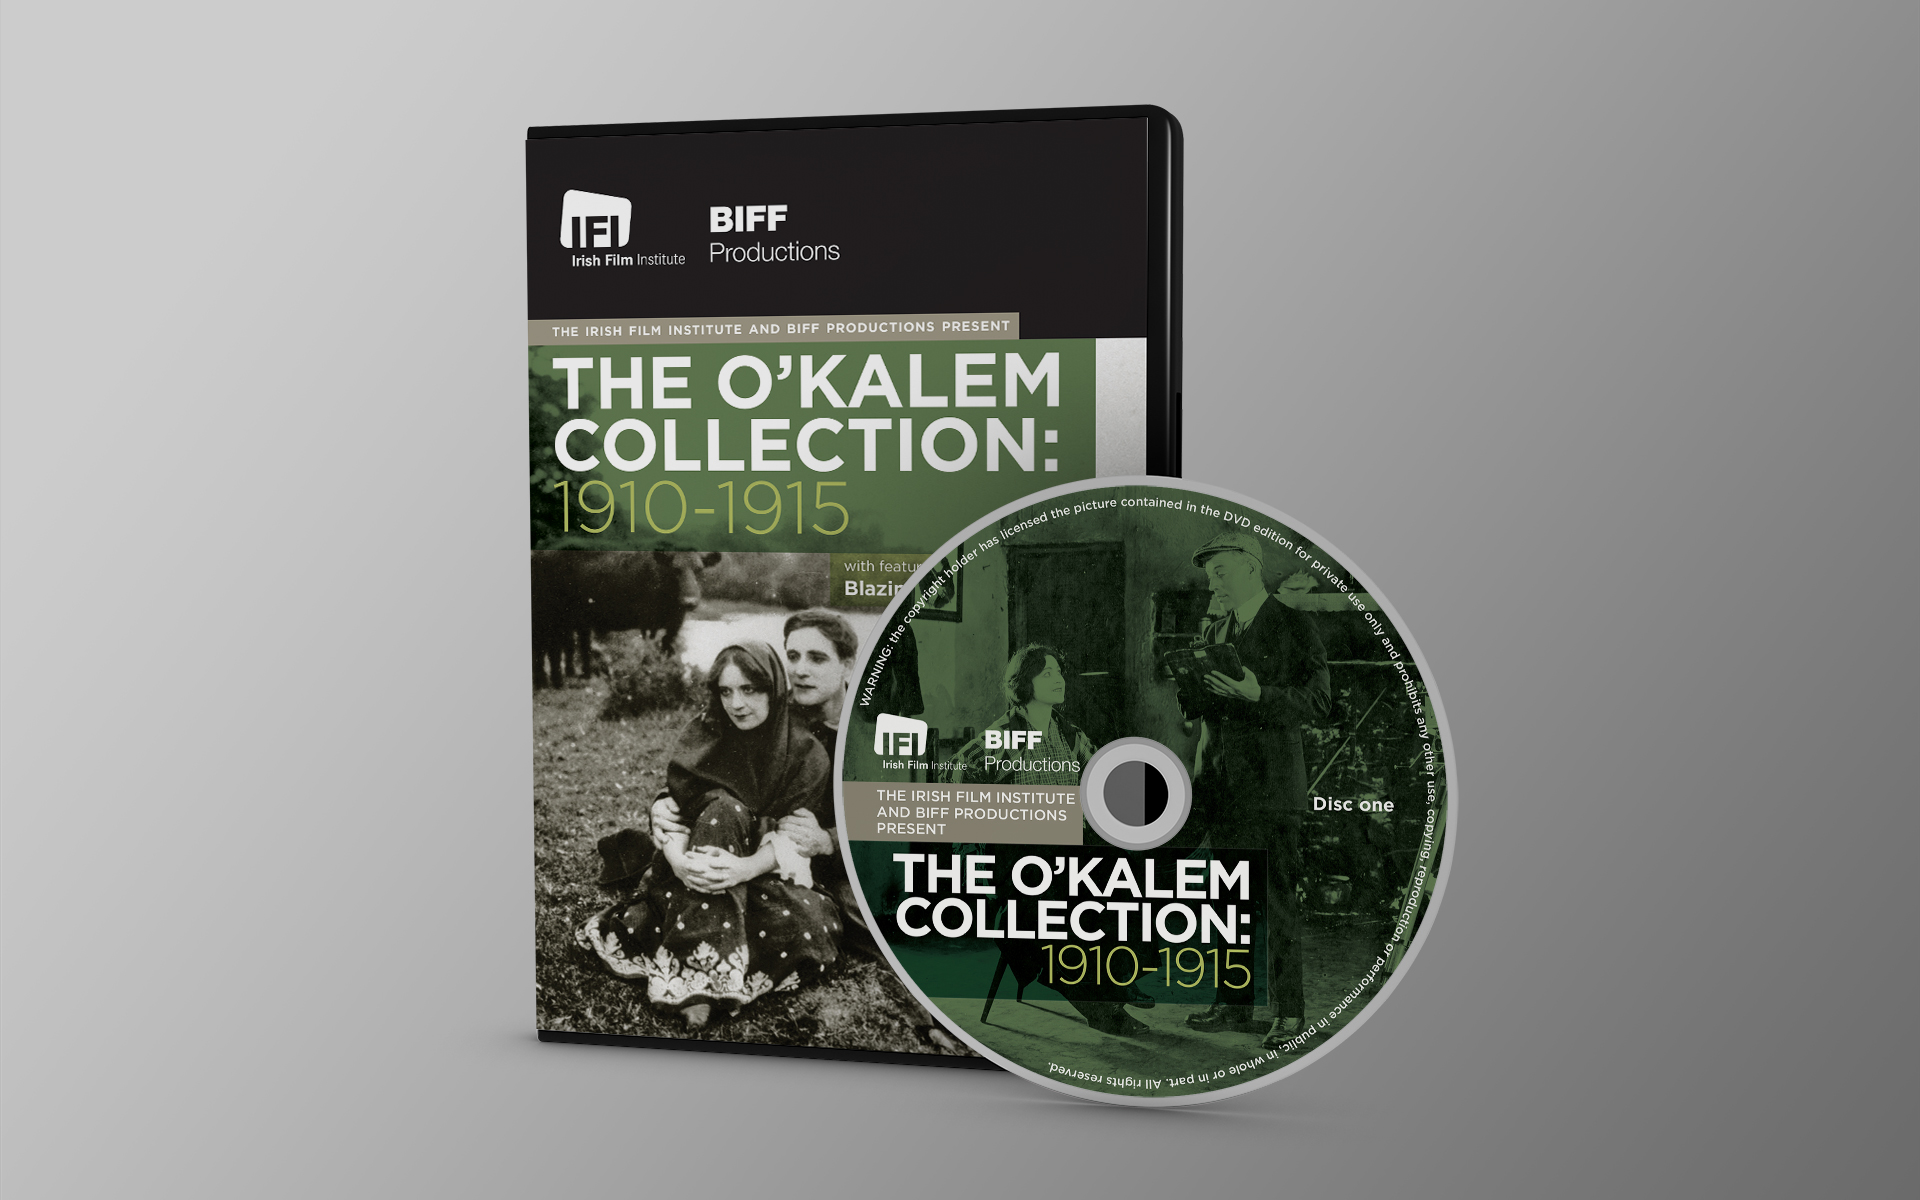 IFI Irish Film Archive O’Kalem Collection DVD package design